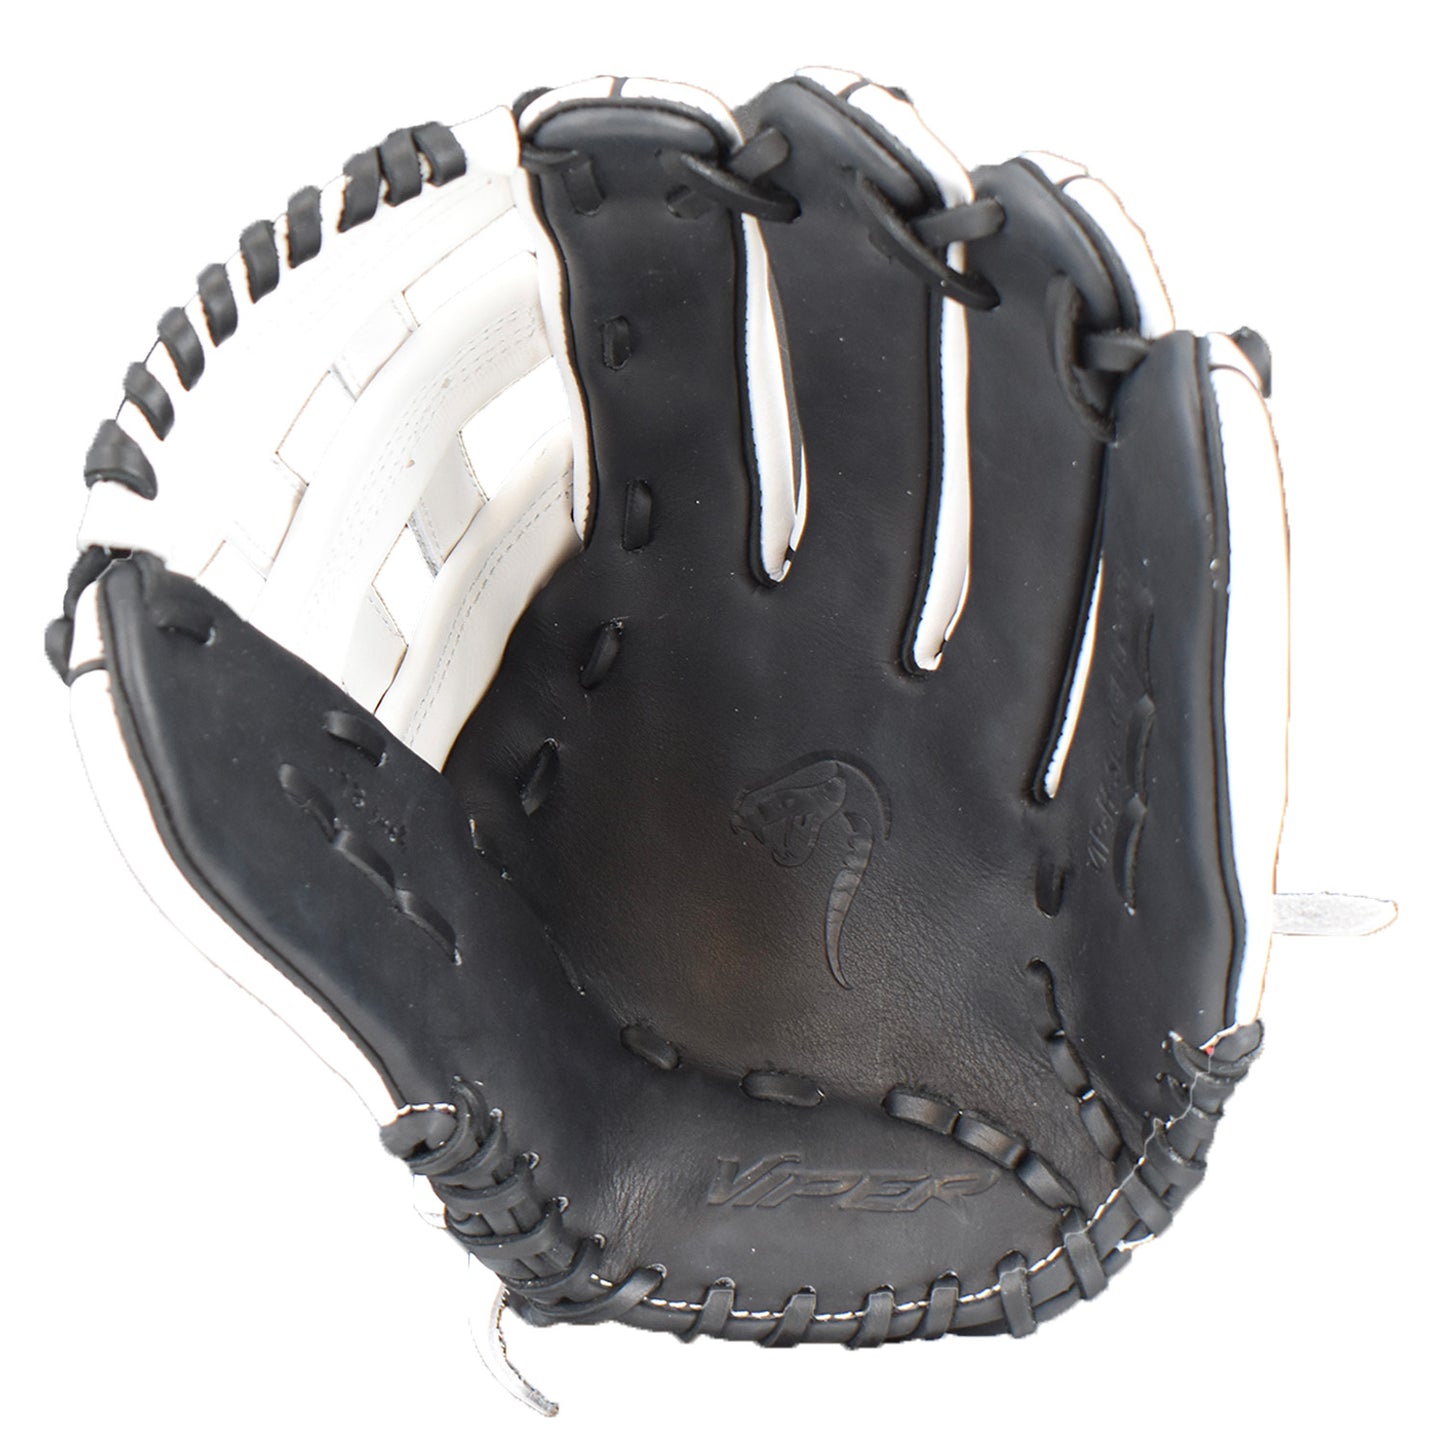 Viper Premium Leather Slowpitch Softball Fielding Glove – Game Ready Edition - VIP-H-SL-W-BLK-001